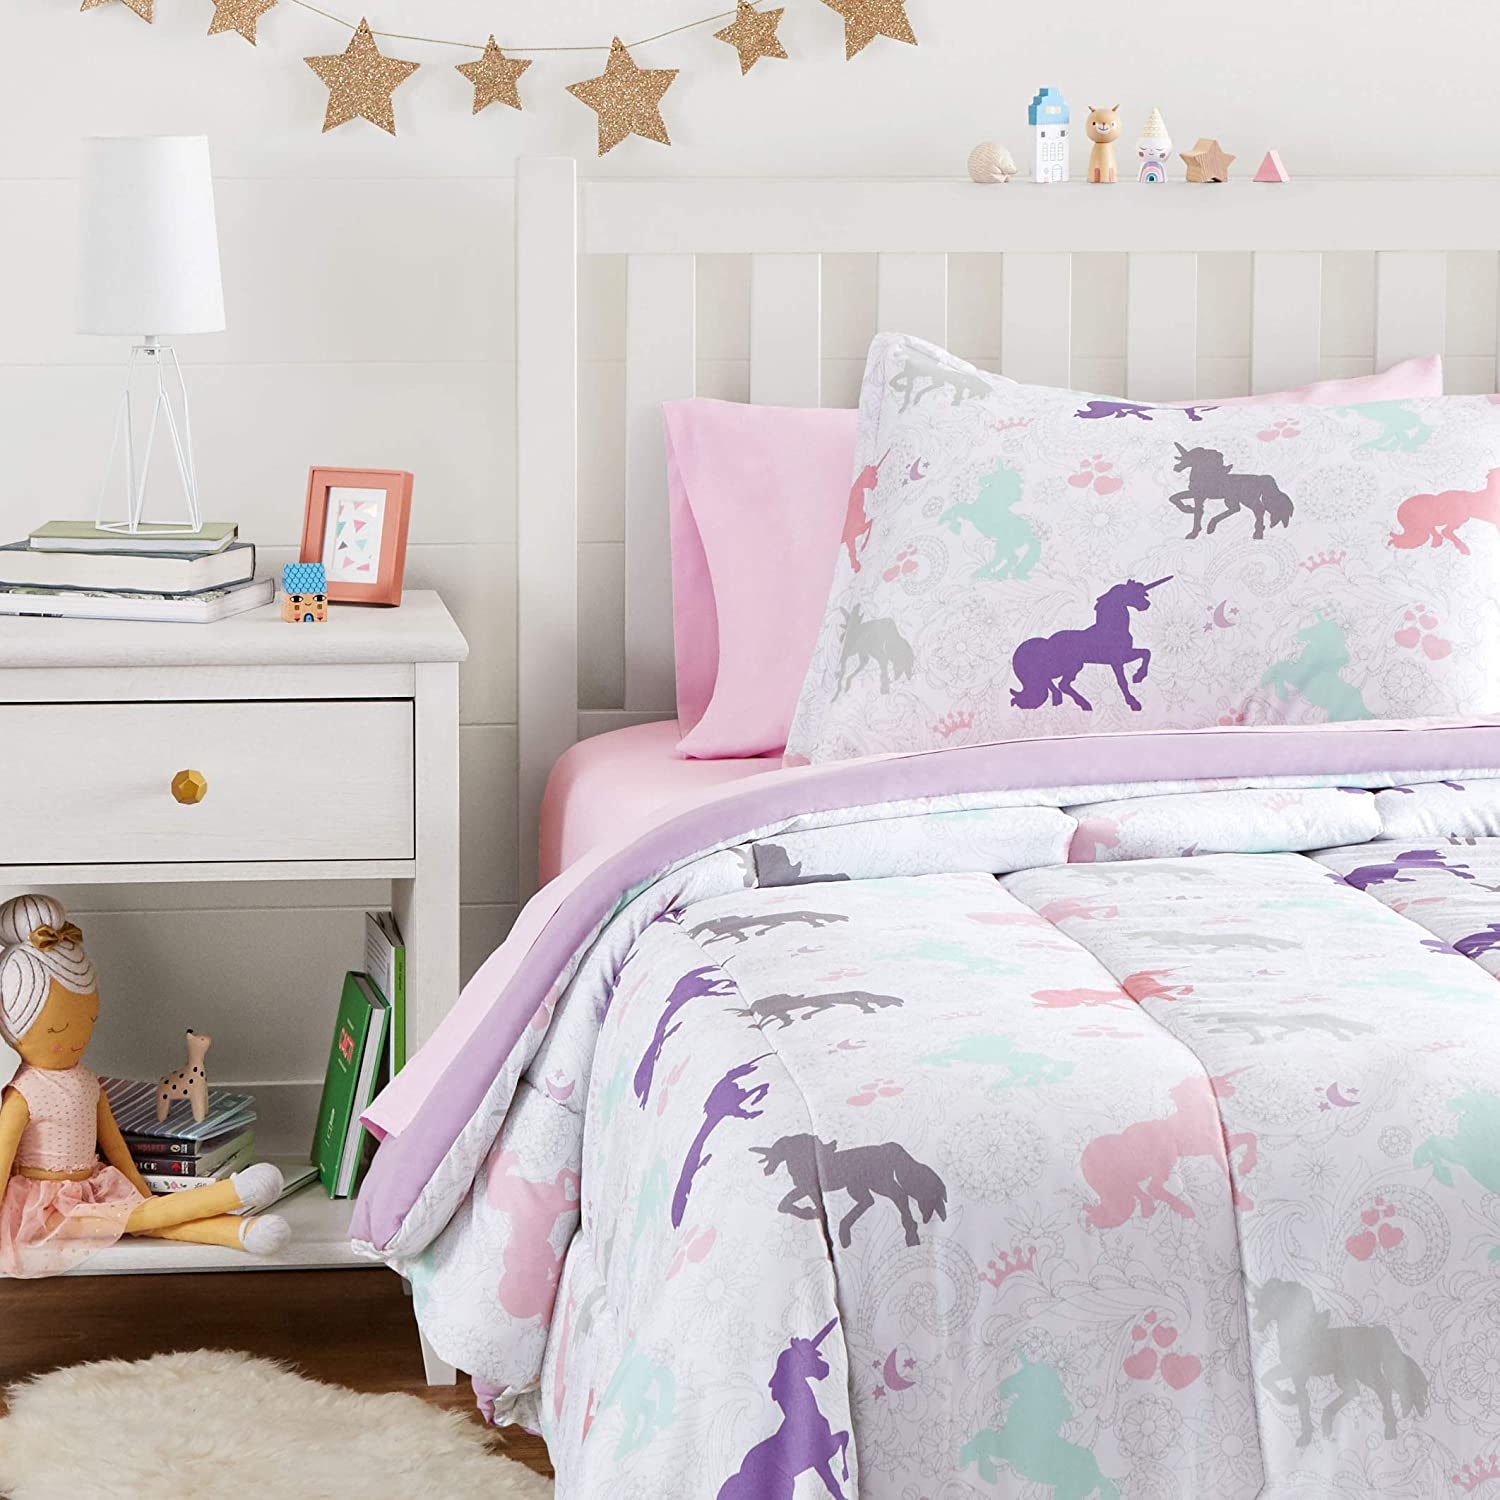 AmazonBasics Ultra Soft Unicorn Girls’ Bedding Set, 5-Piece